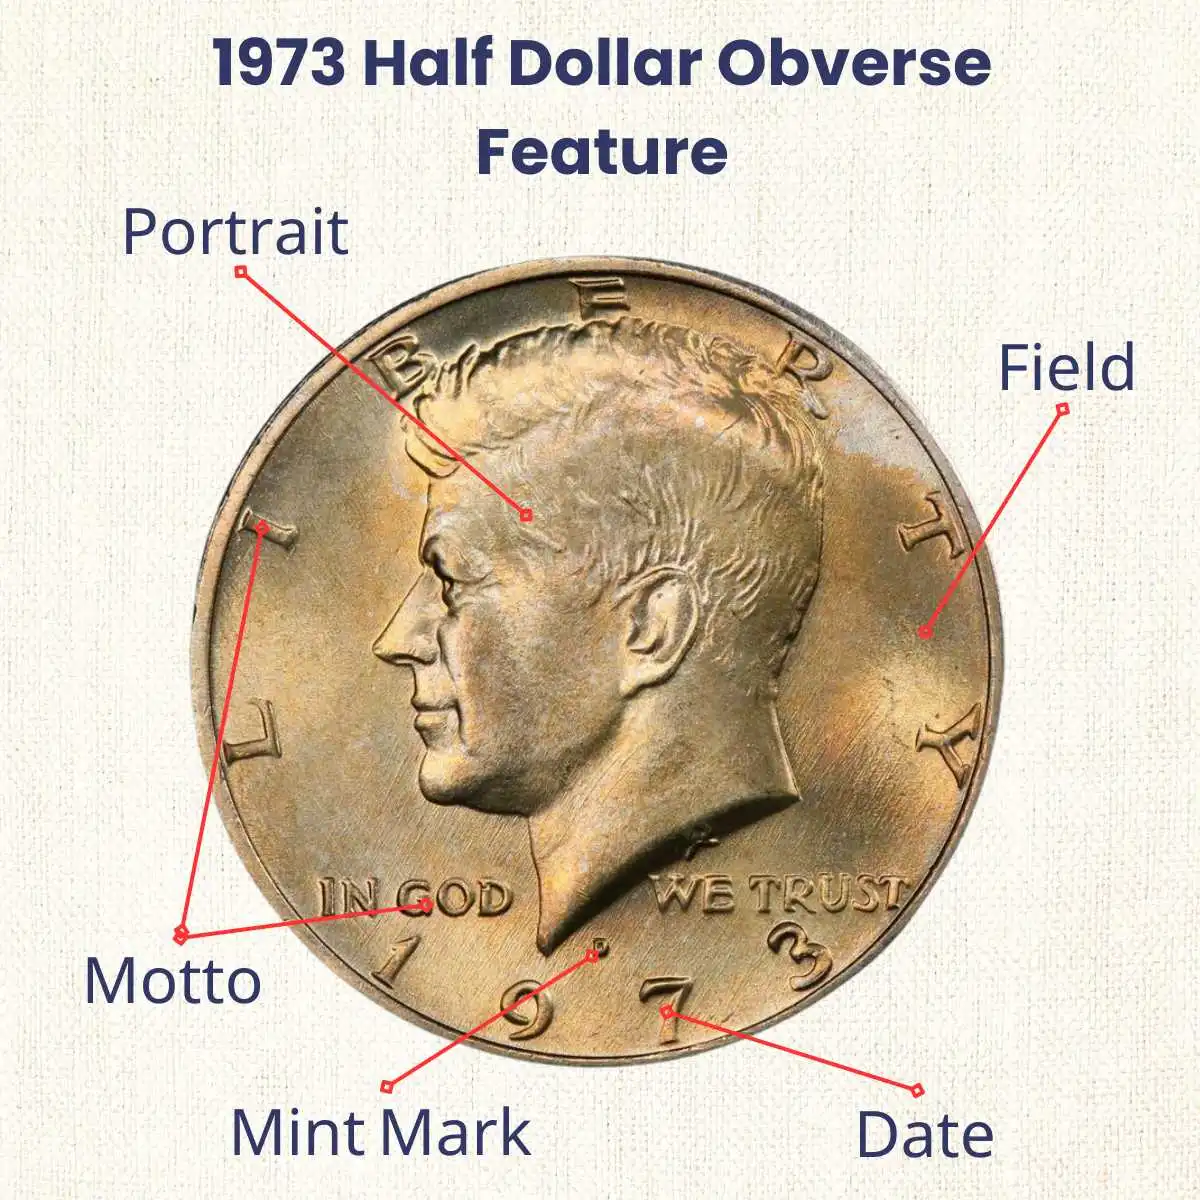 1973 Half Dollar obverse feature